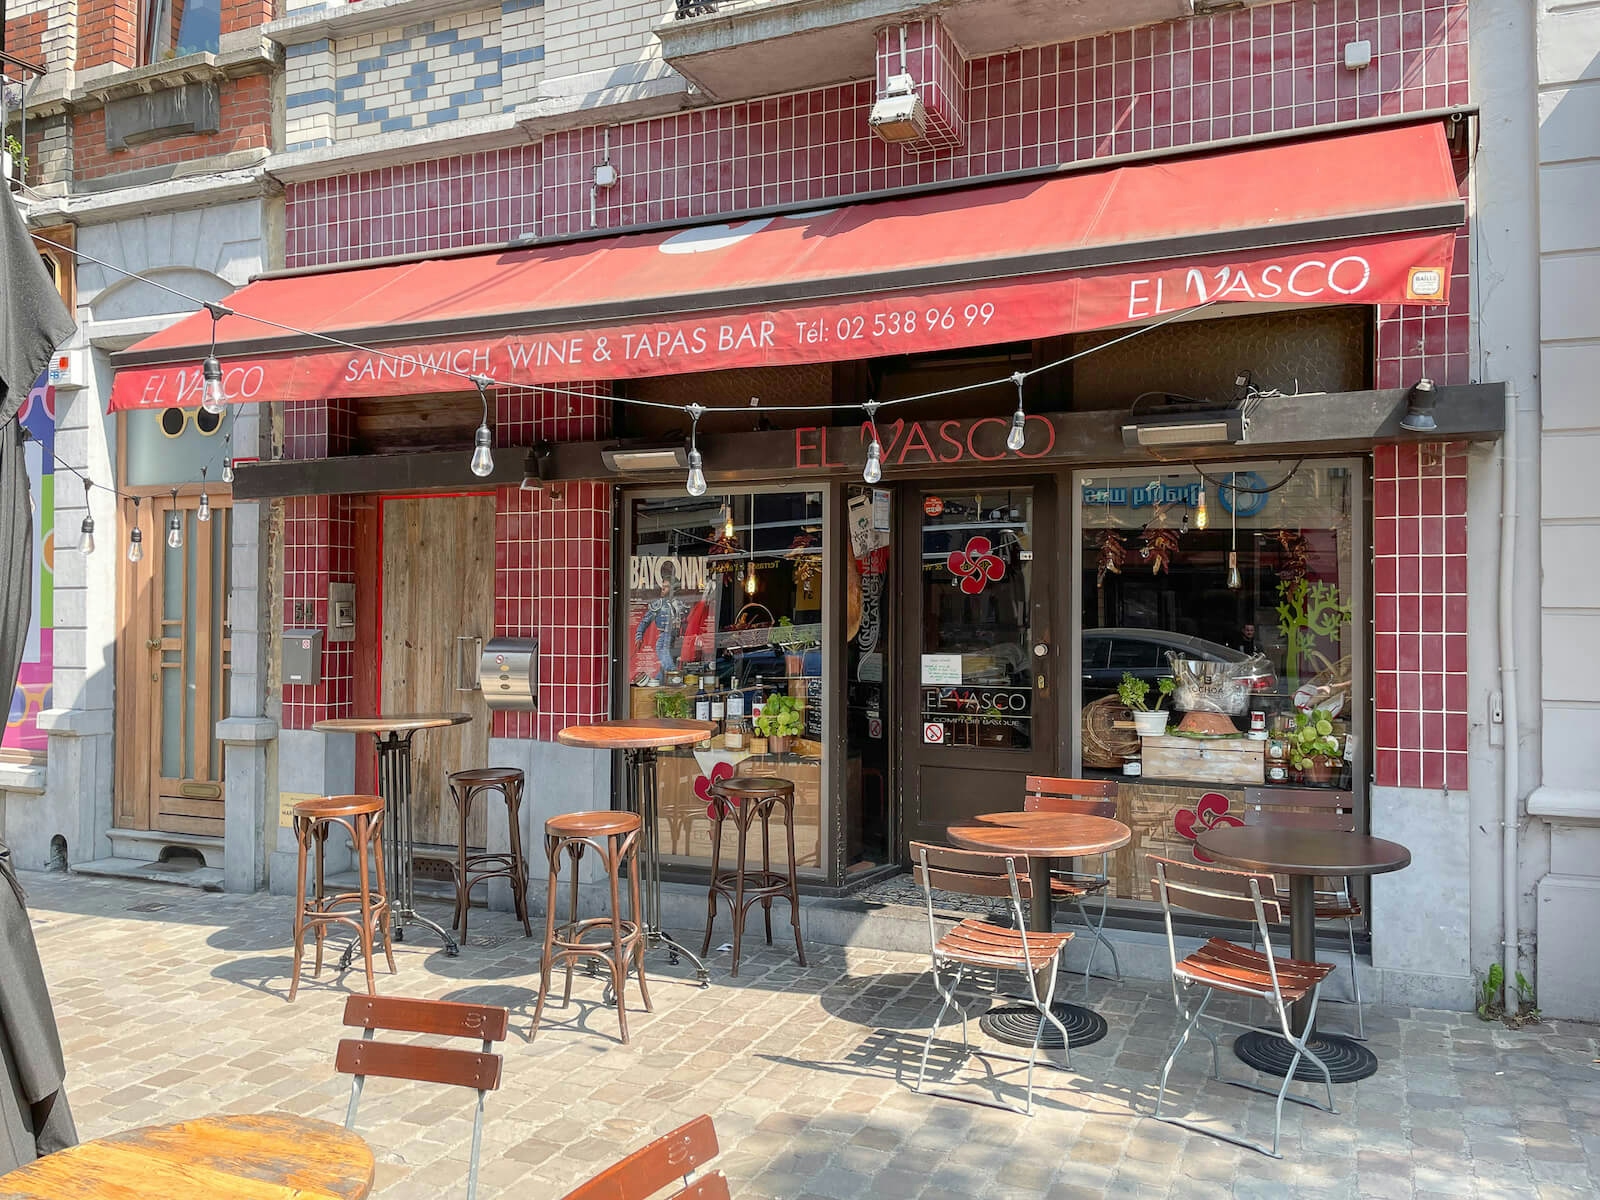 Terrasse du restaurant El Vasco à Ixelles